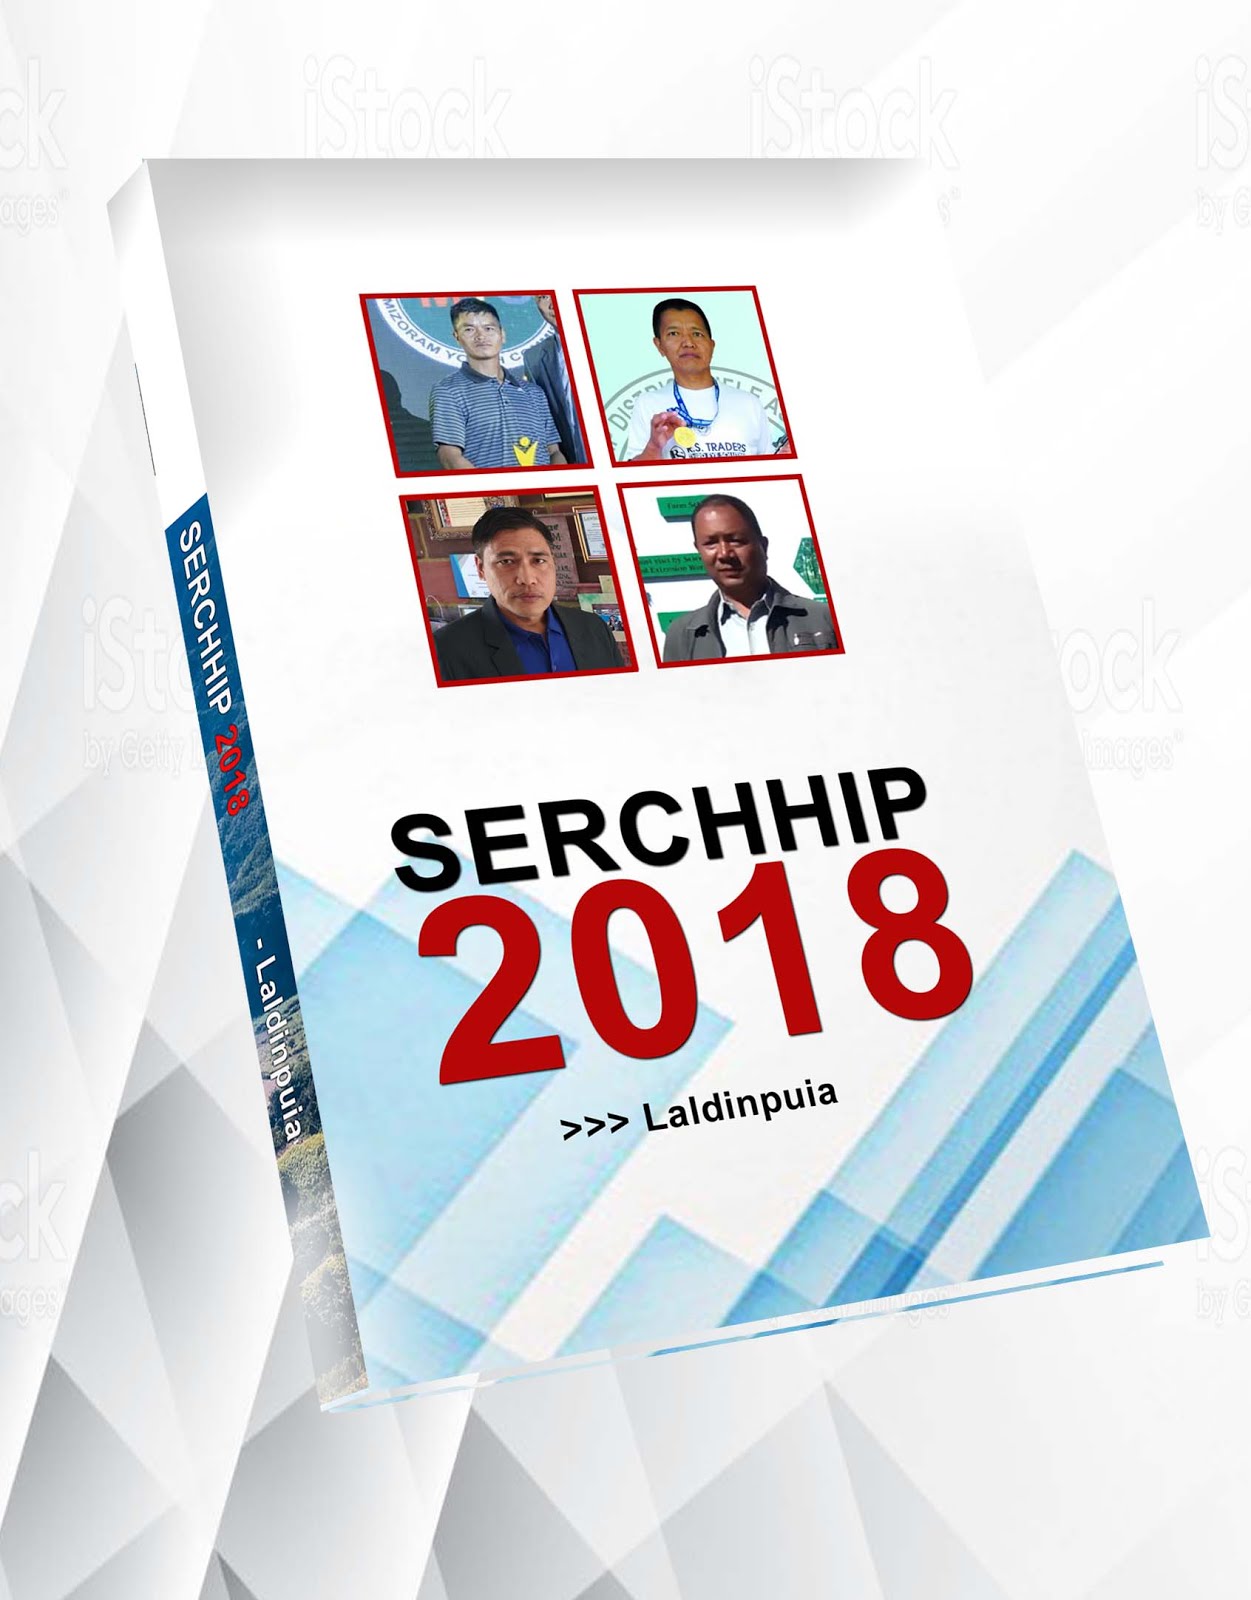 Serchhip 2018